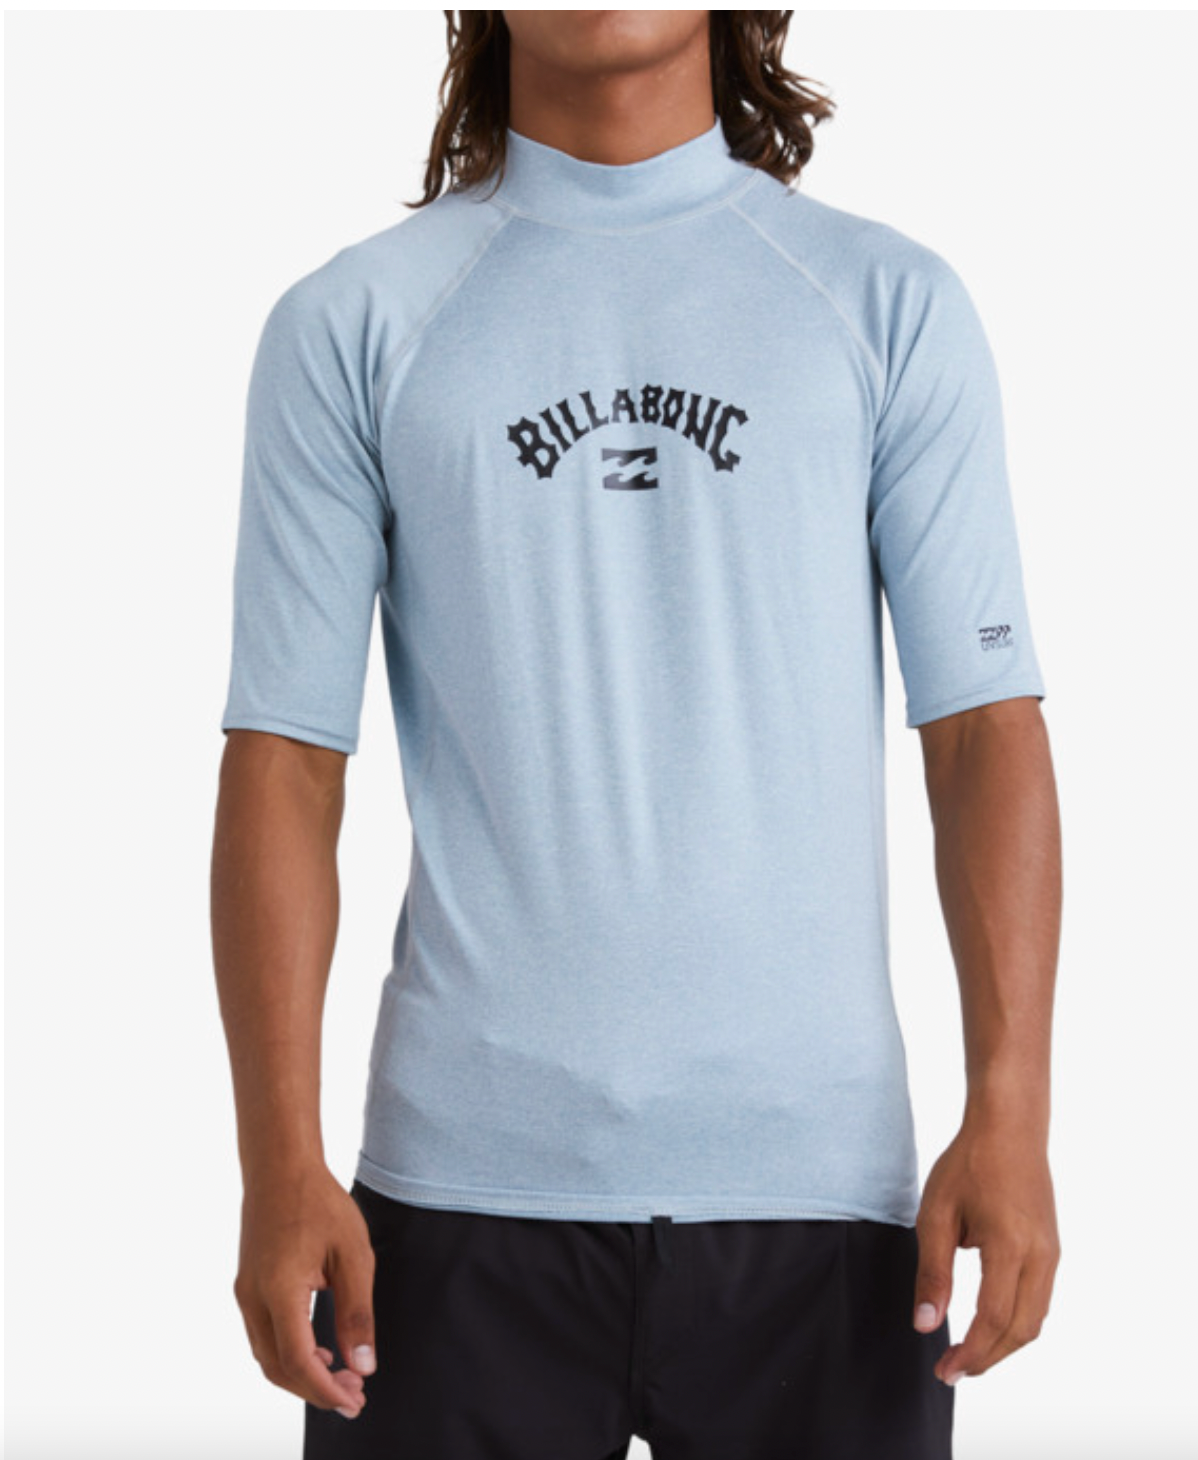 Arch Wave - Short Sleeve UPF 50 Surf T-Shirt for Men